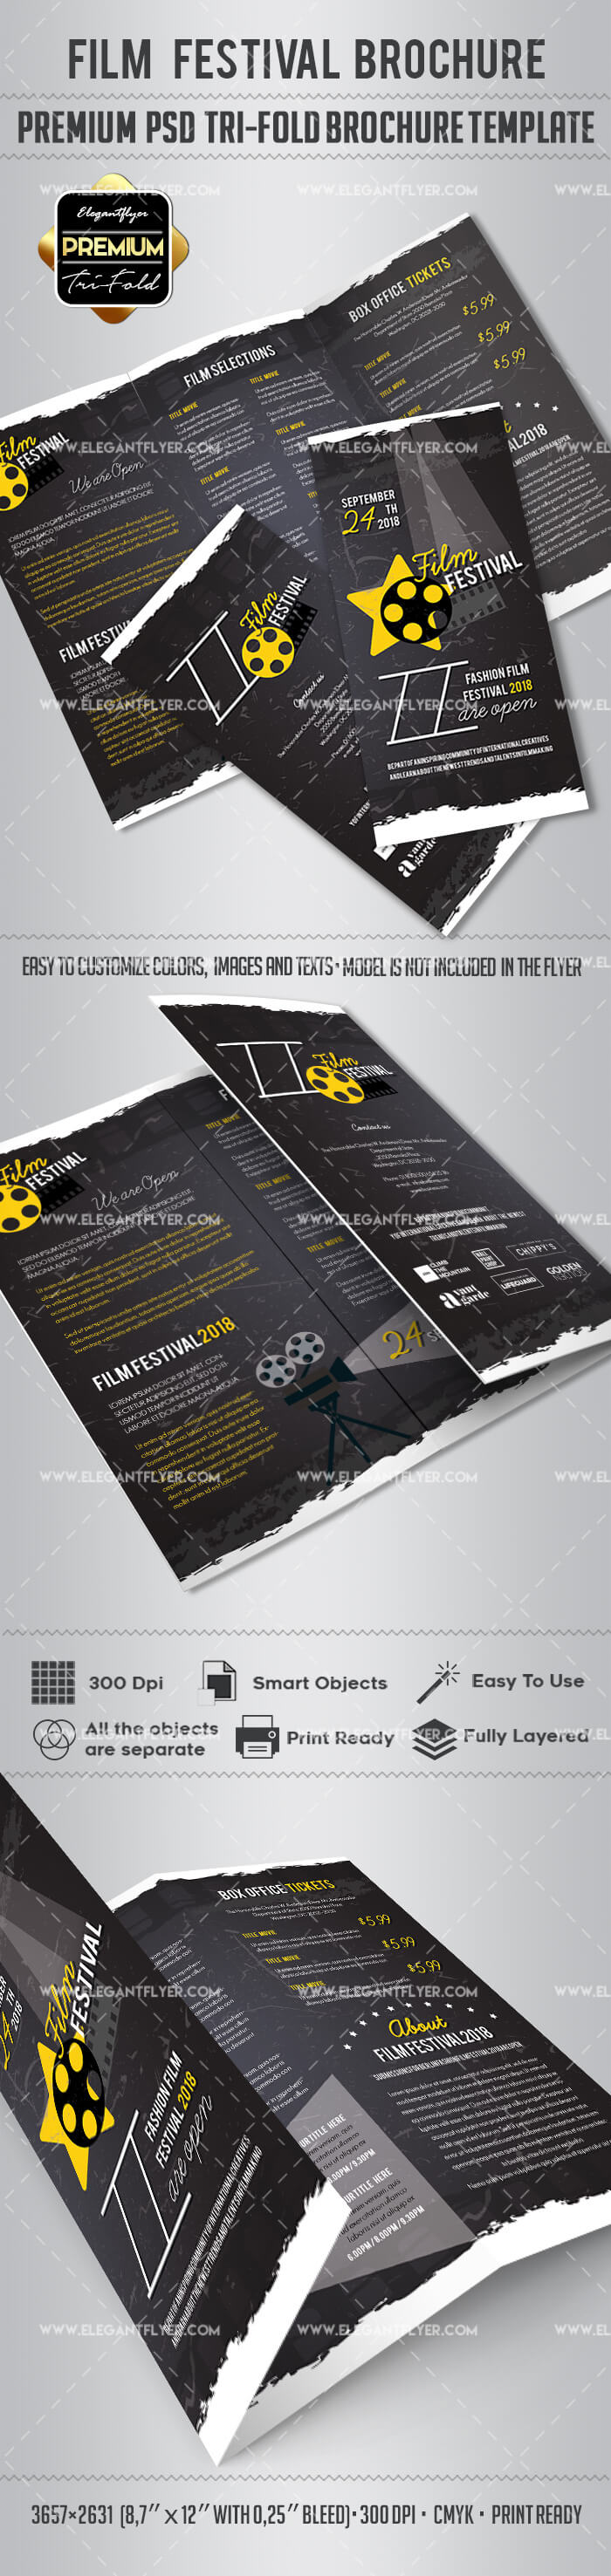 Film Festival Brochure Design With Regard To Film Festival Brochure Template